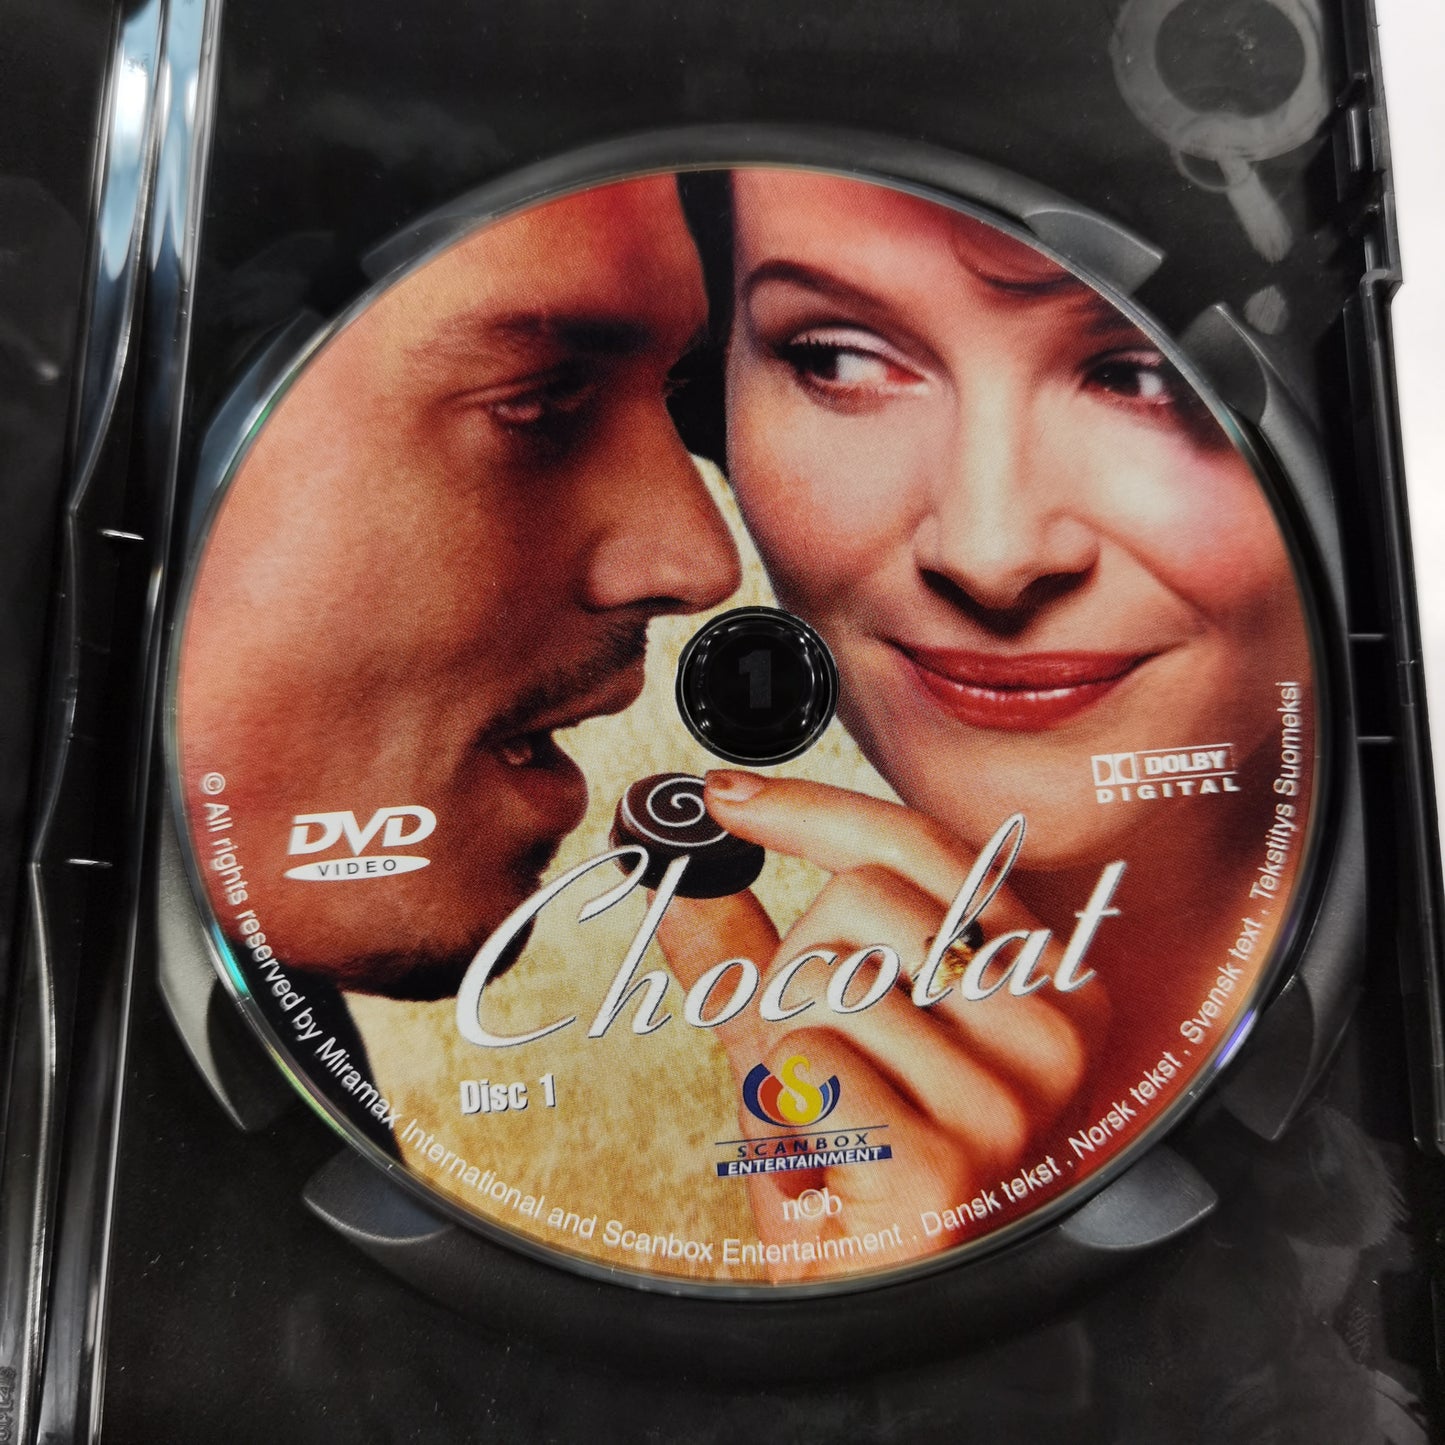 Chocolat (2000) - DVD SE